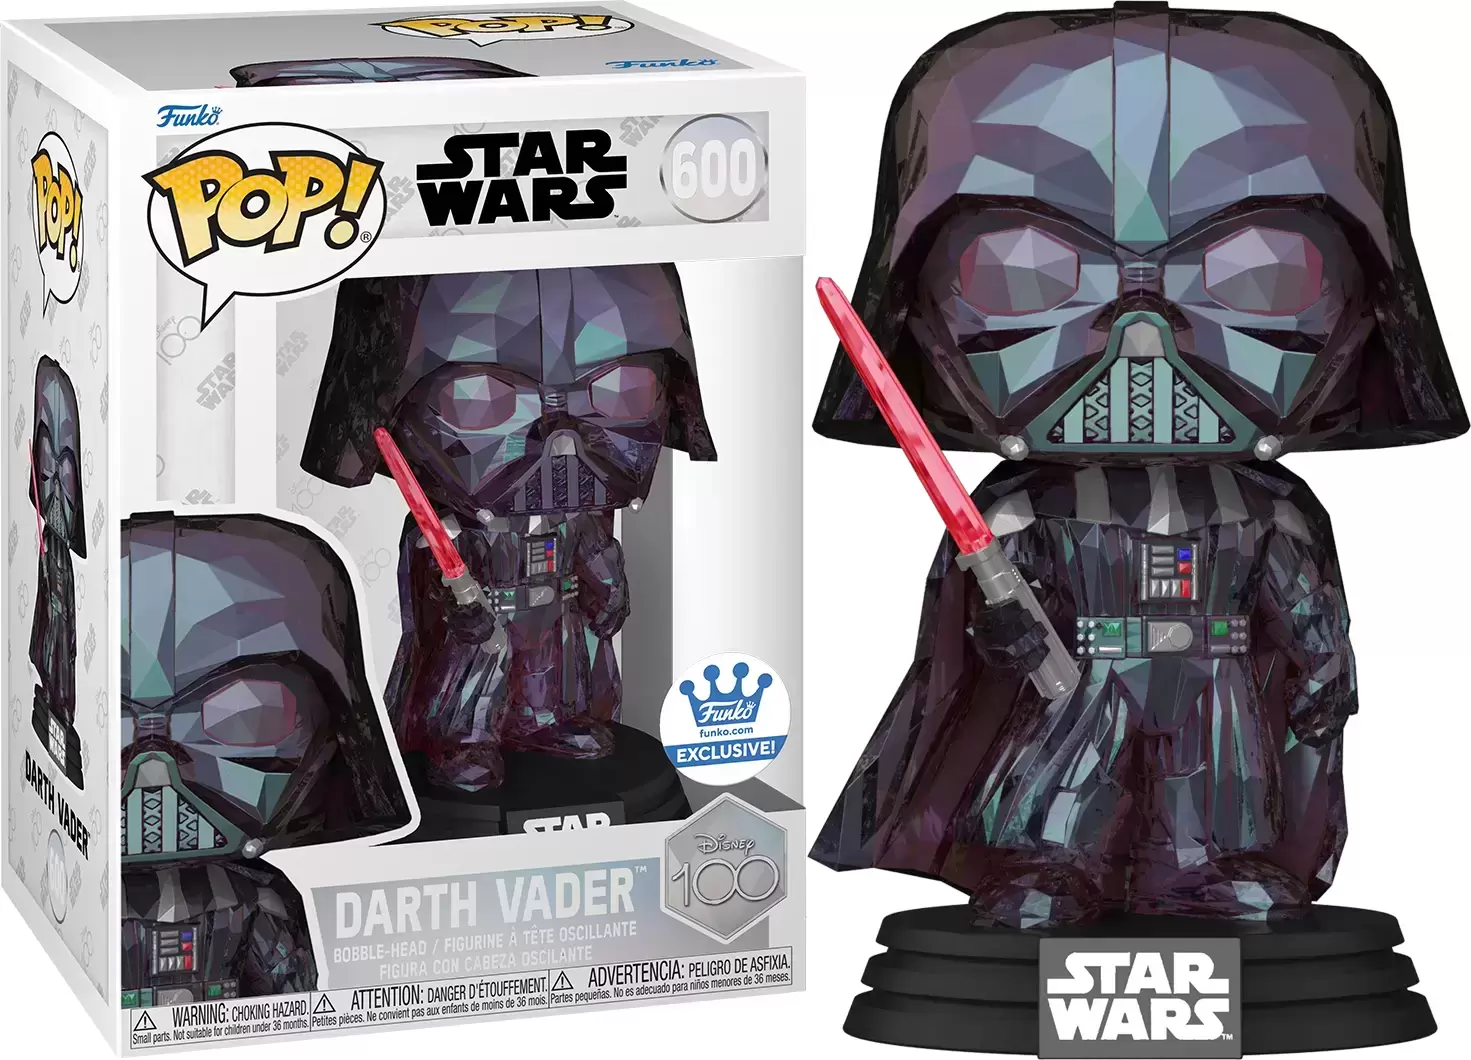 Star Wars - Darth Vader Facets - POP! Star Wars action figure 600